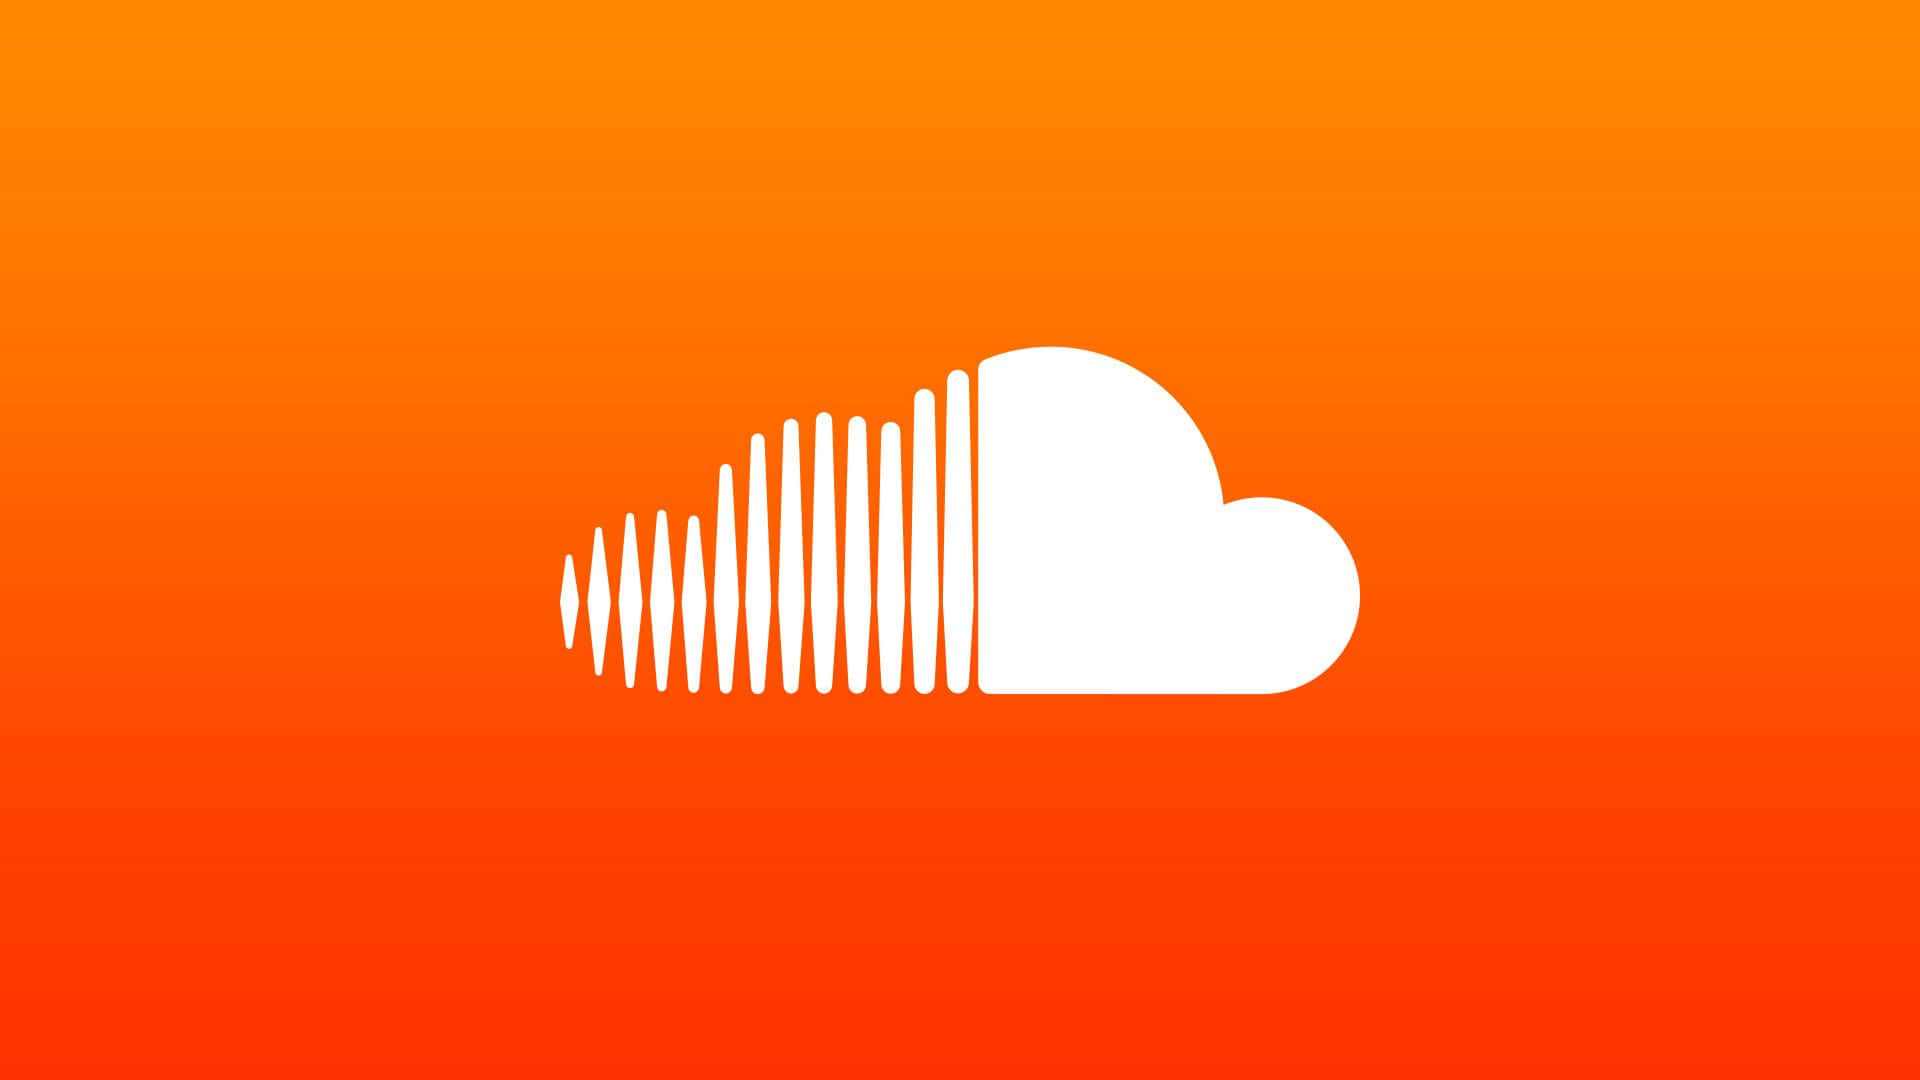 Unlock new sounds through your music journey on SoundCloud